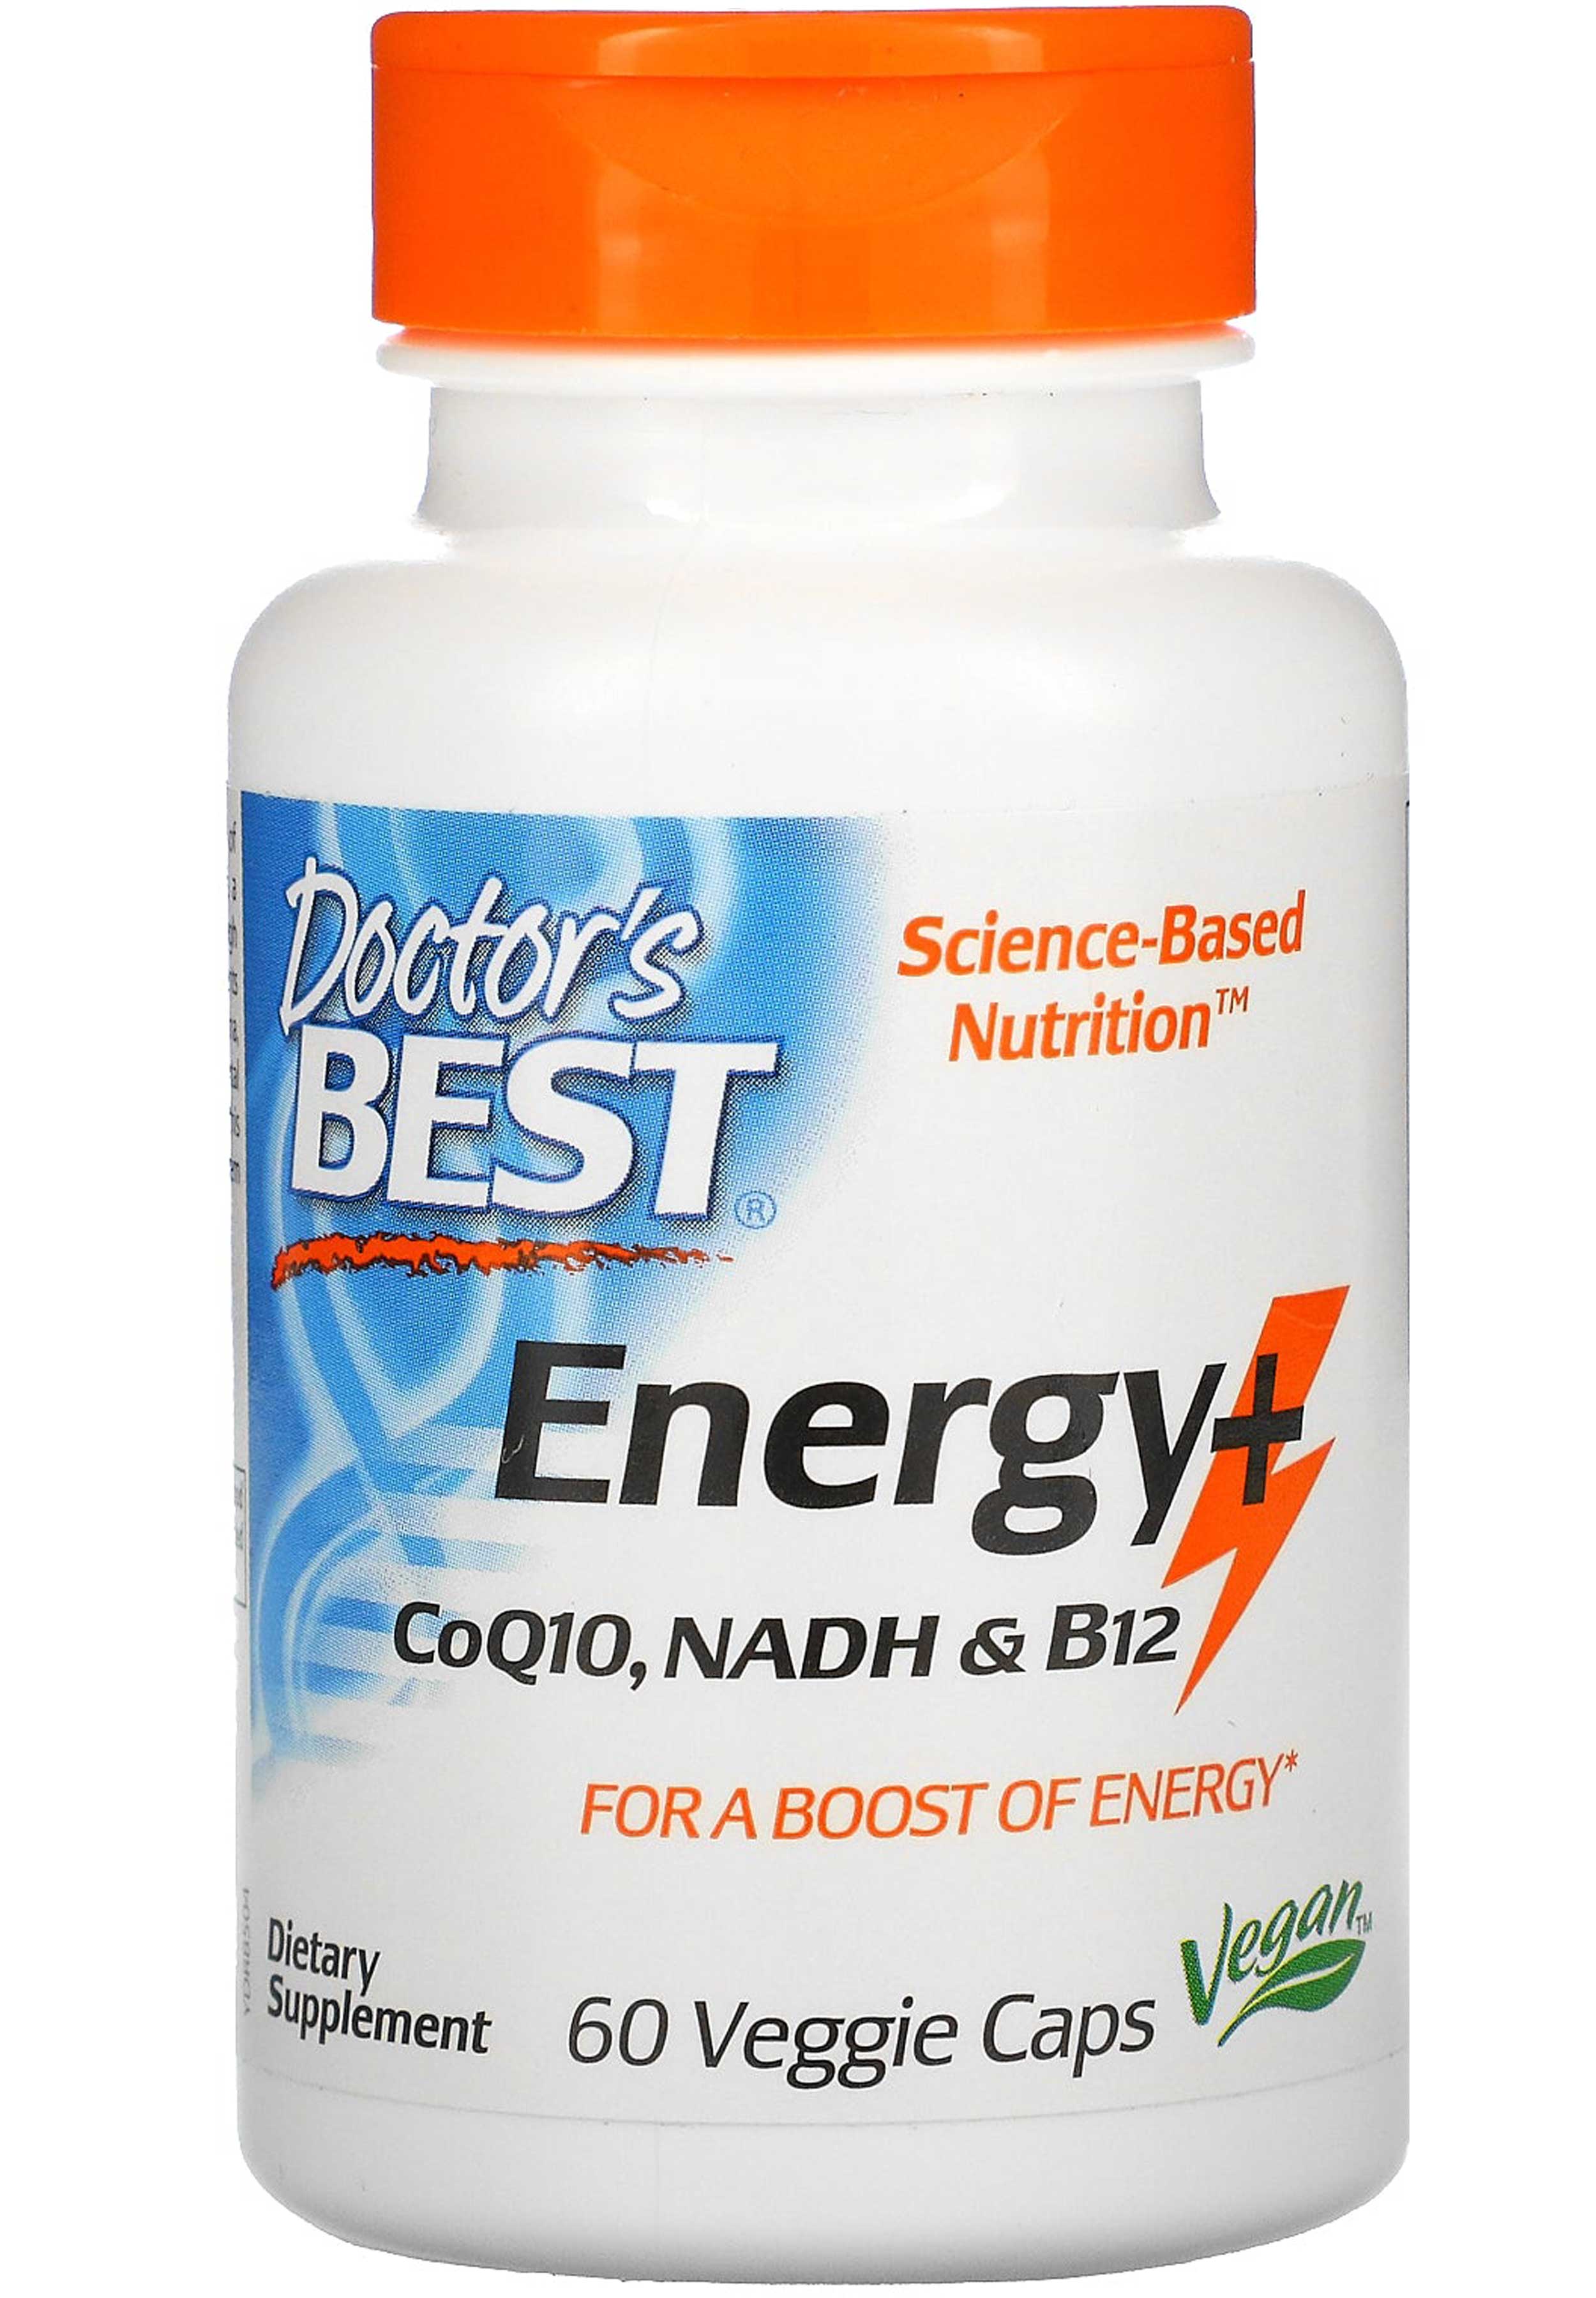 Doctor's Best Energy+ CoQ10, NADH & B12